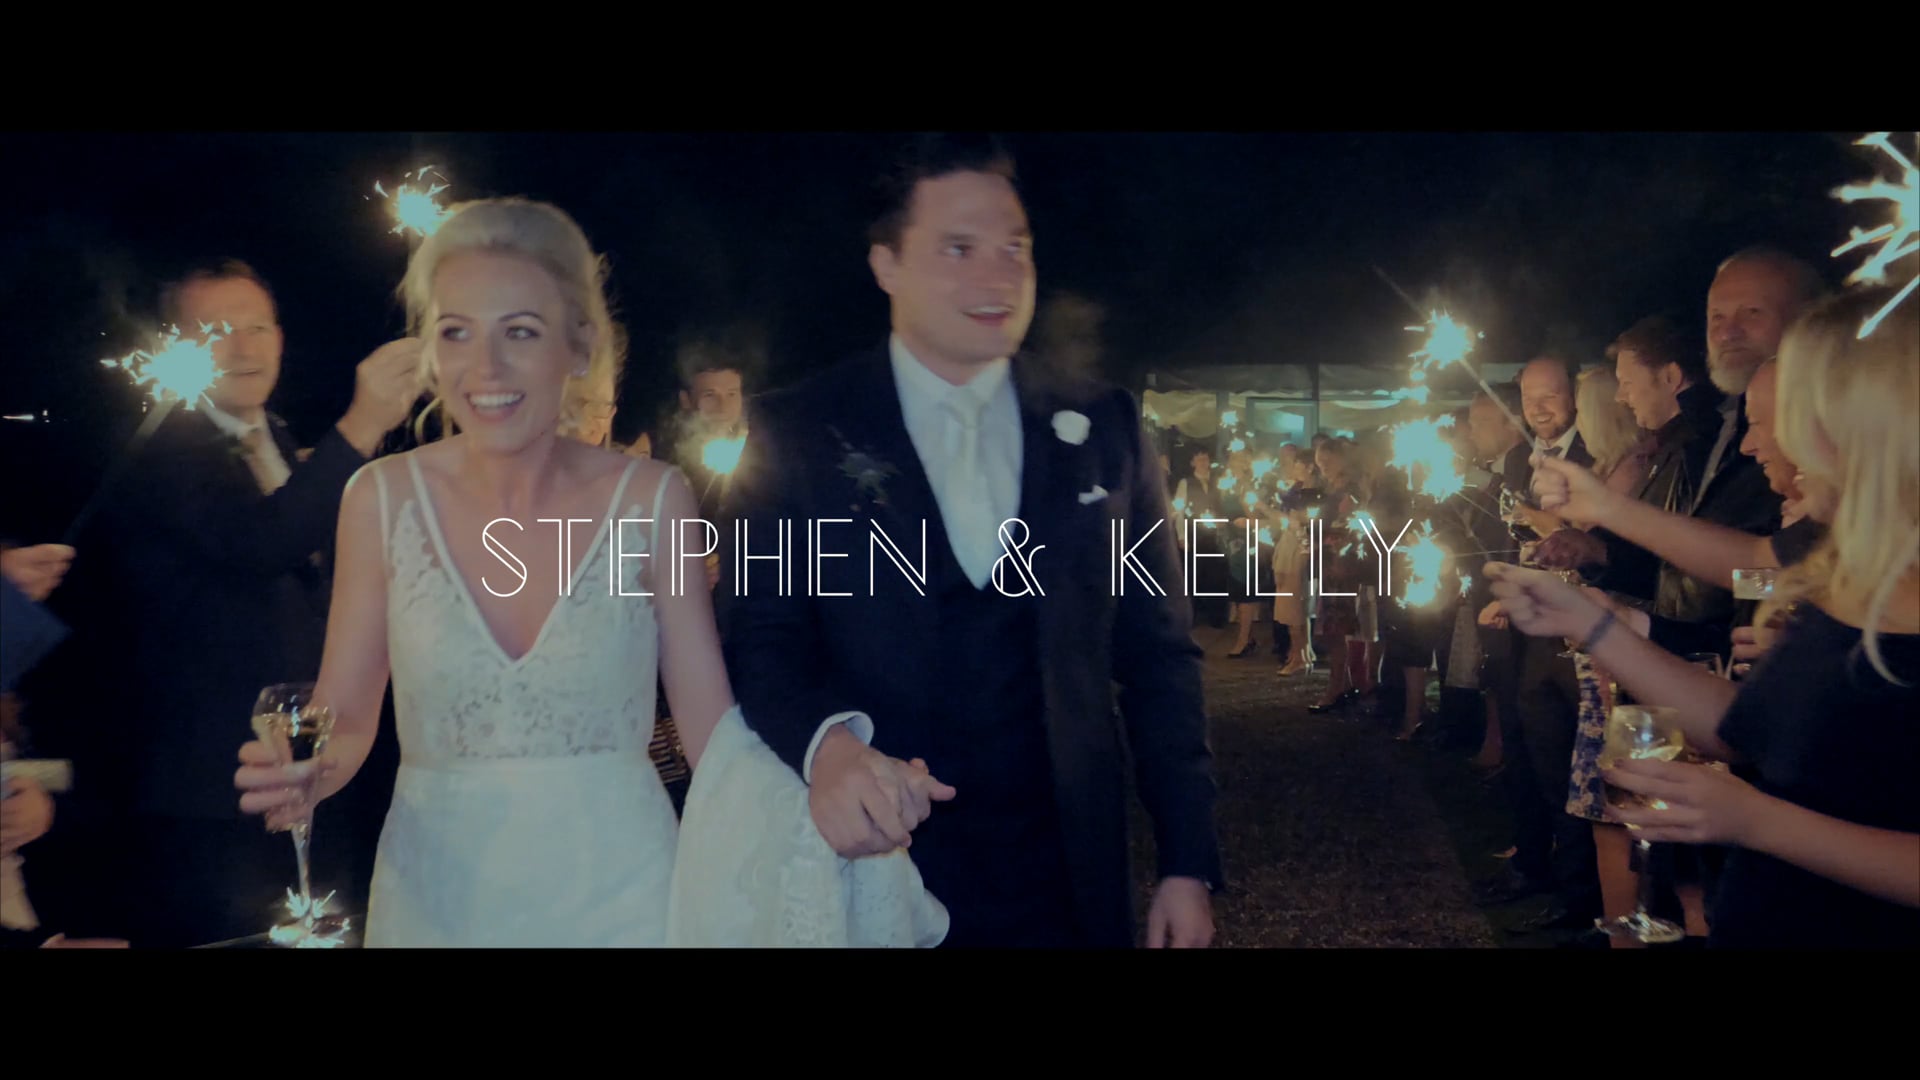 Stephen & Kelly